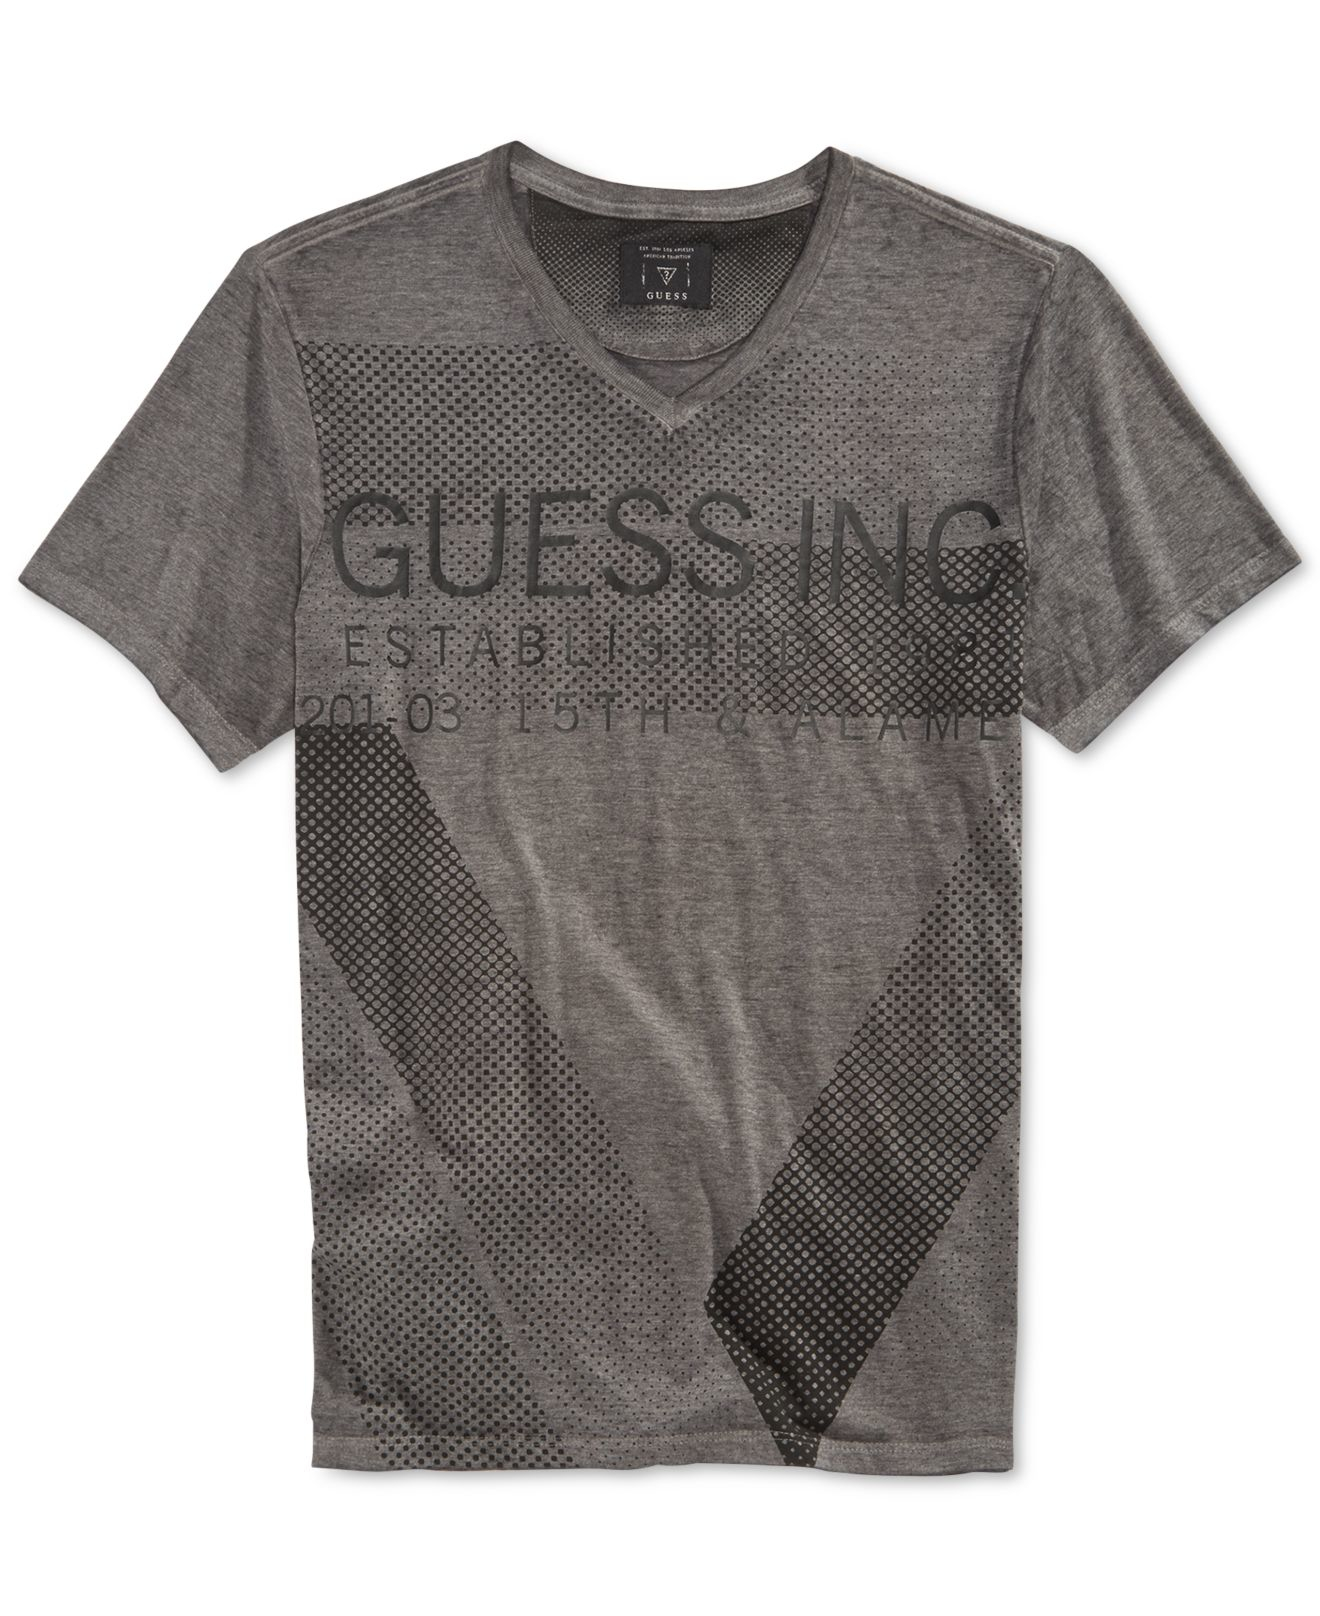 guess t shirt grey